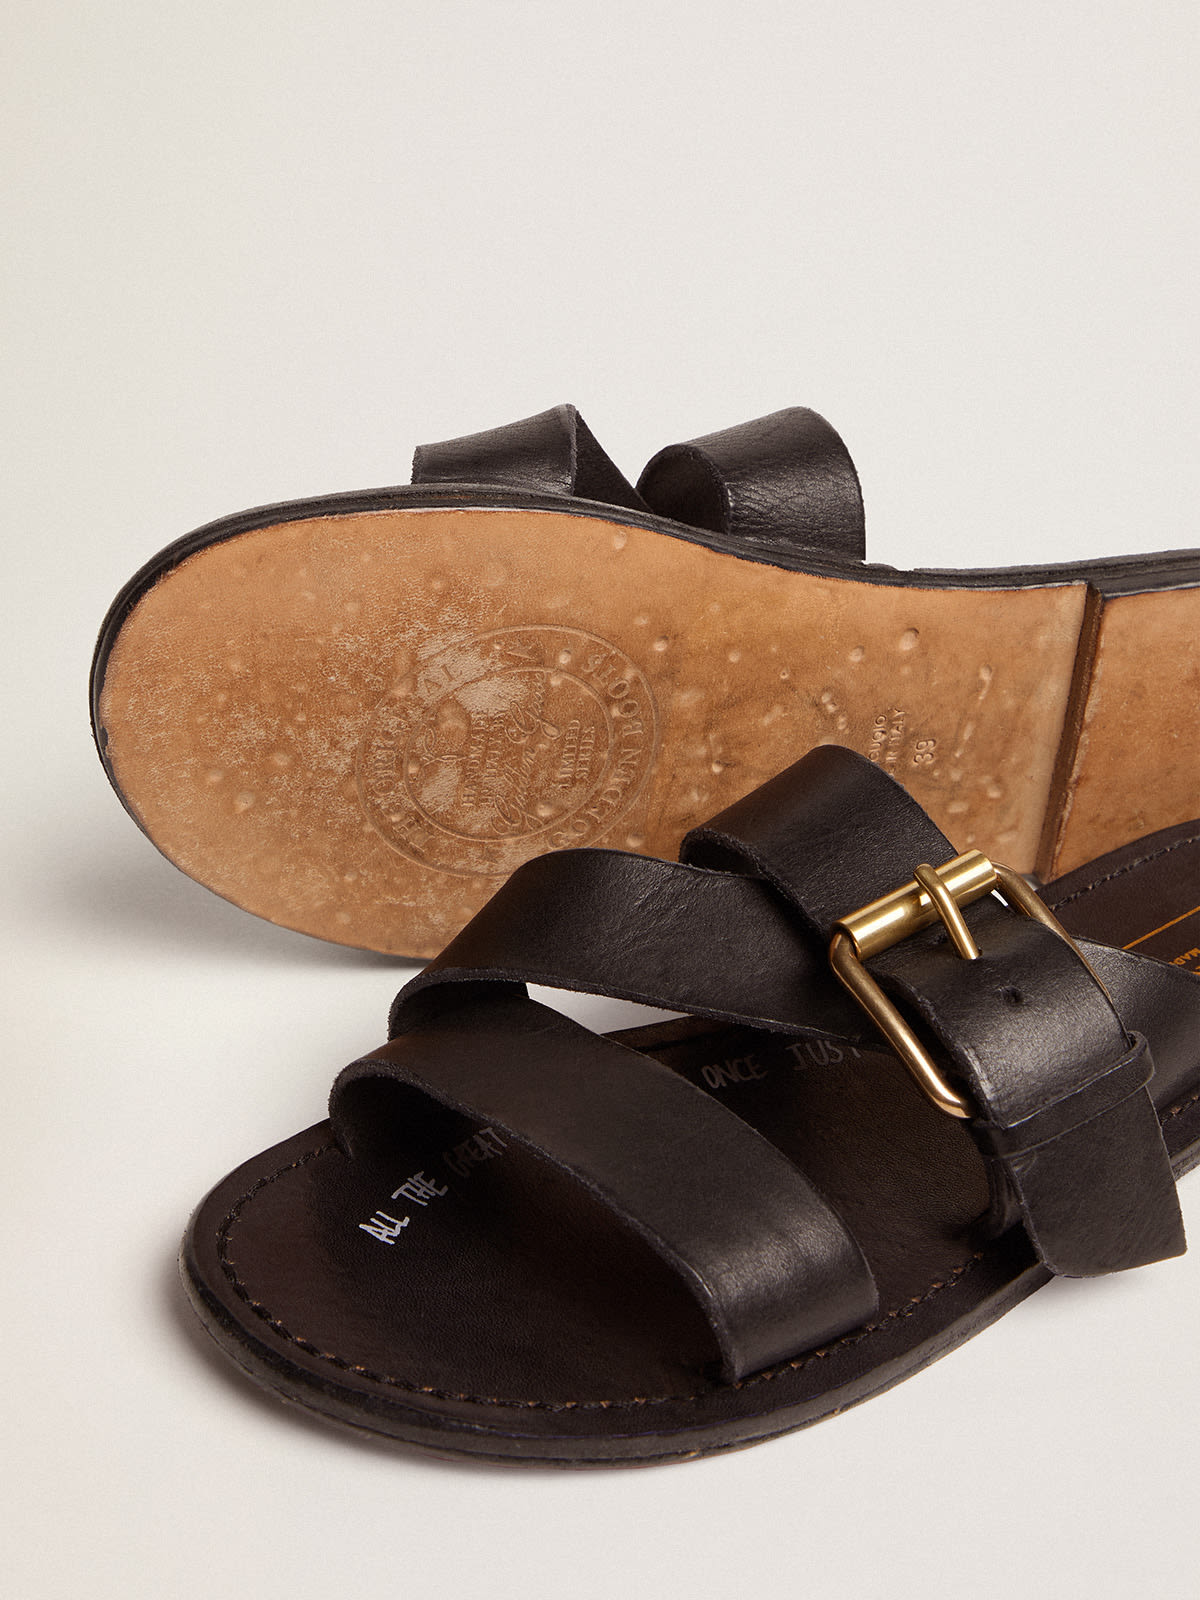 Golden Goose - Margaret flat sandals in black resin-coated leather in 